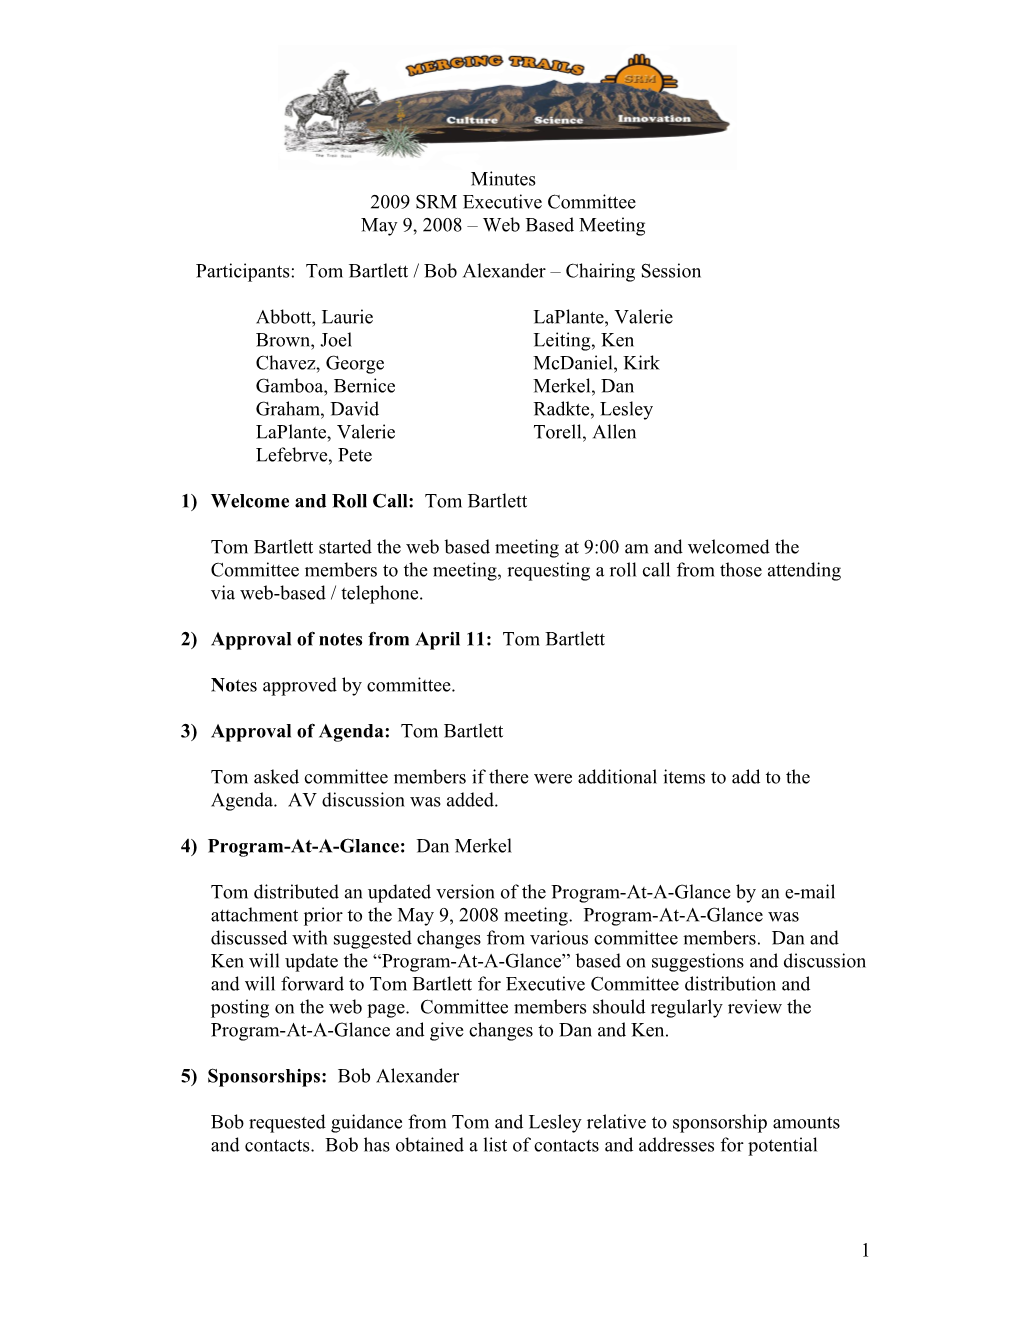 SRM 2009 Committee Meeting Minutes